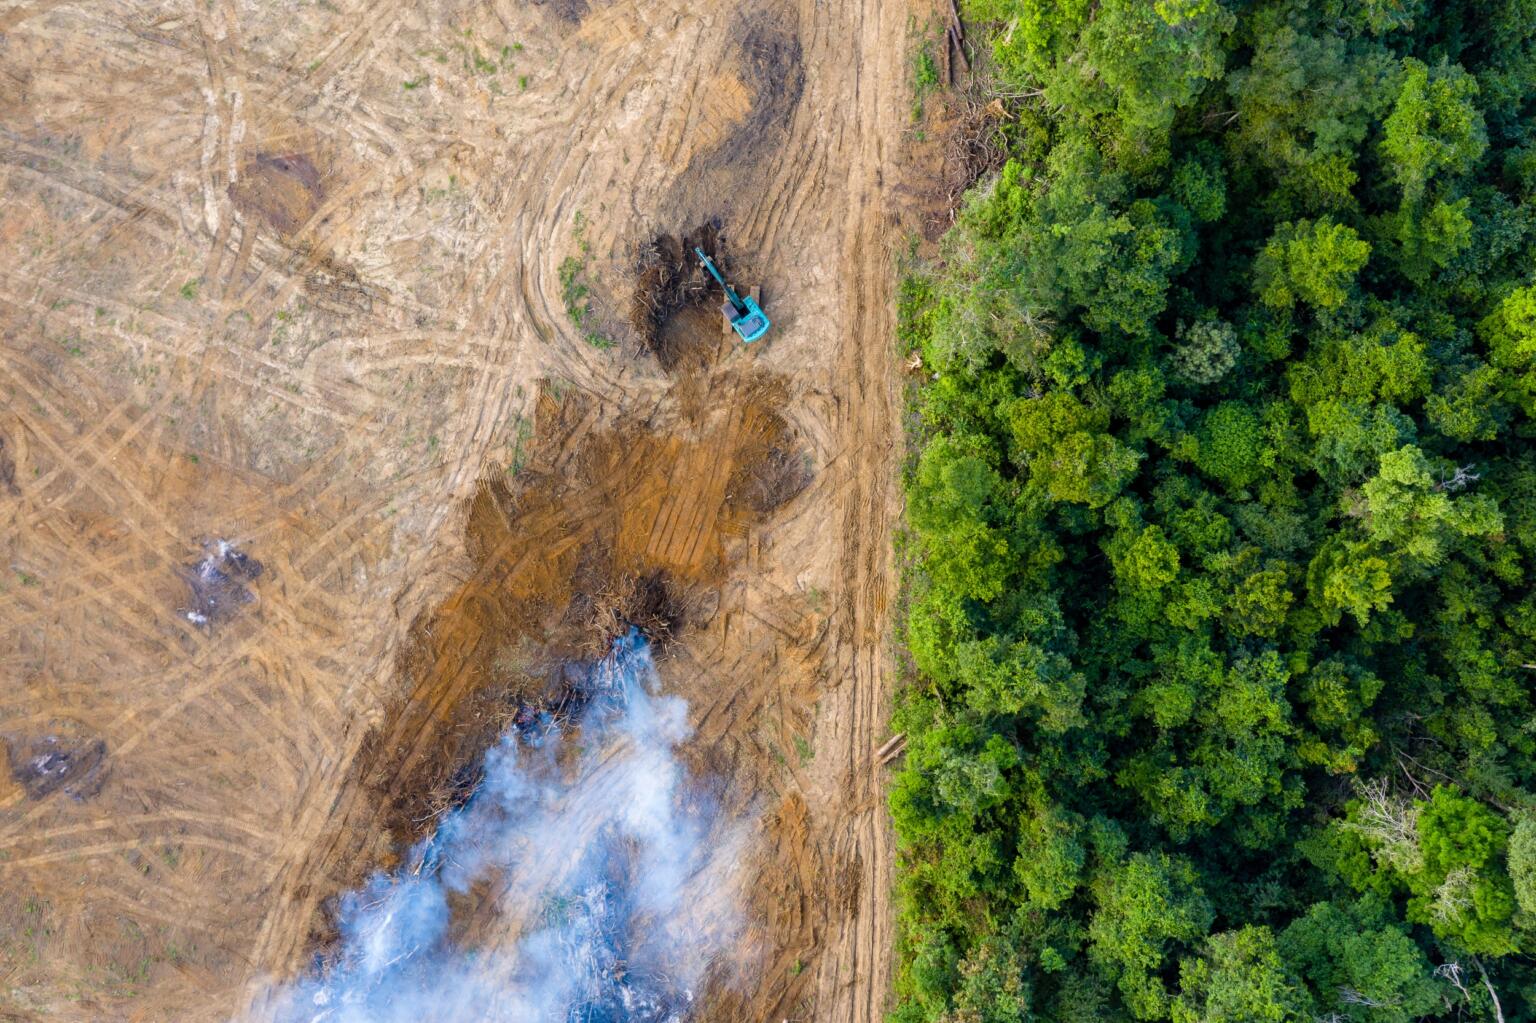 deforestation in the Amazon